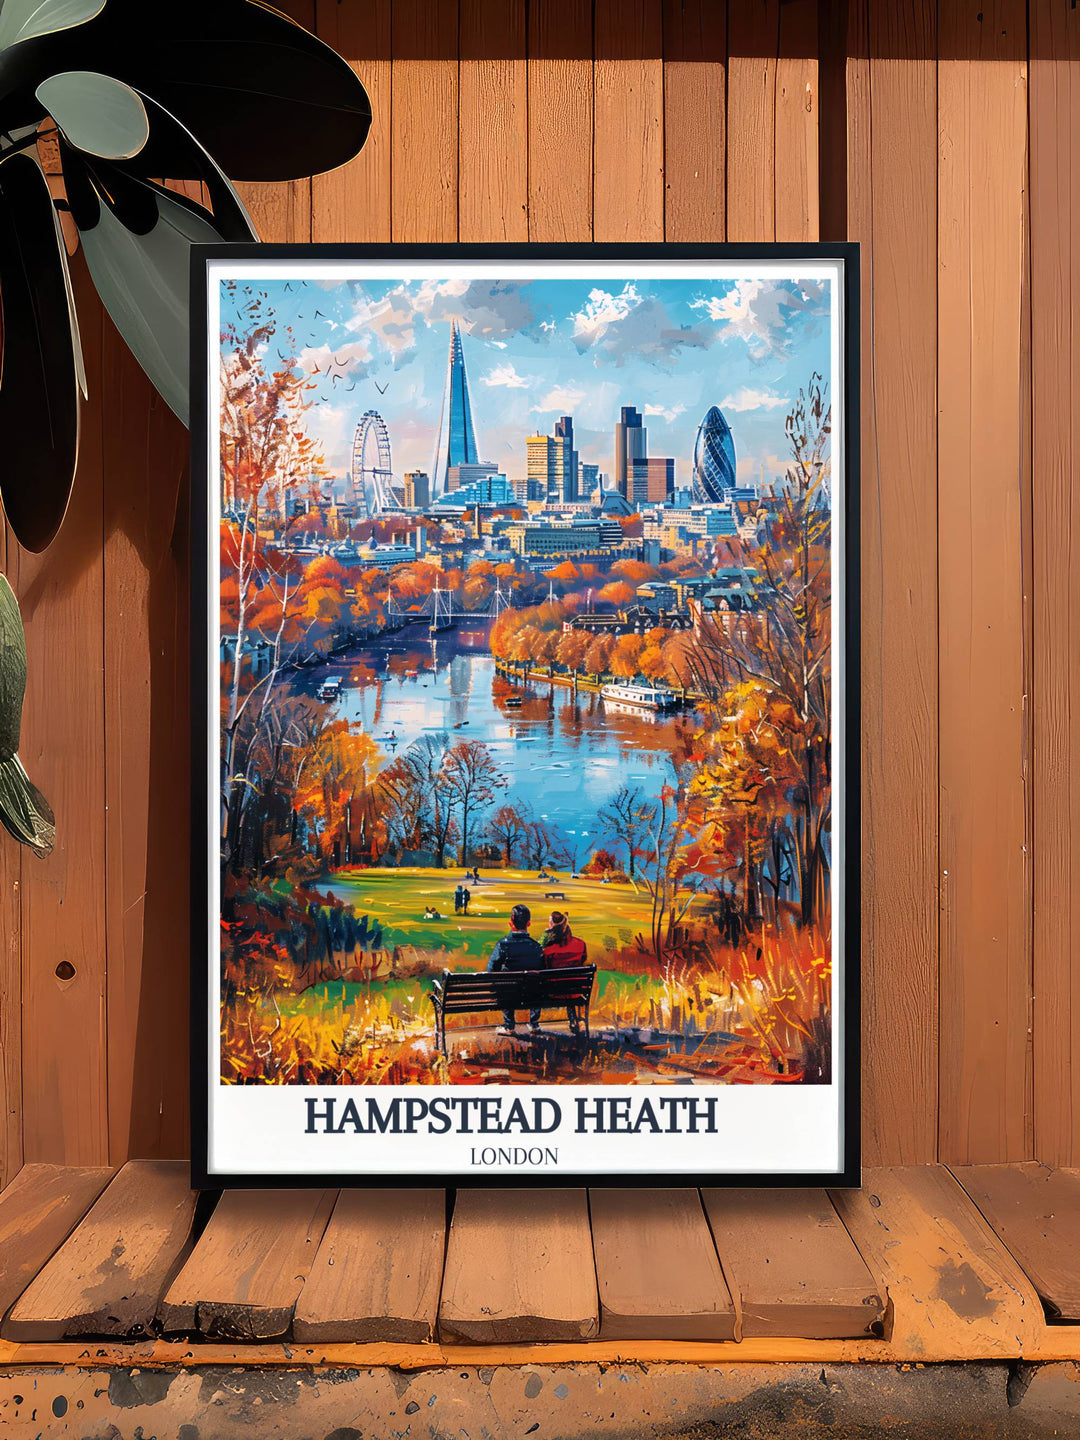 Elegant print showcasing Gospel Oak in Hampstead Heath, highlighting its tranquil beauty and lush surroundings in vivid colors.